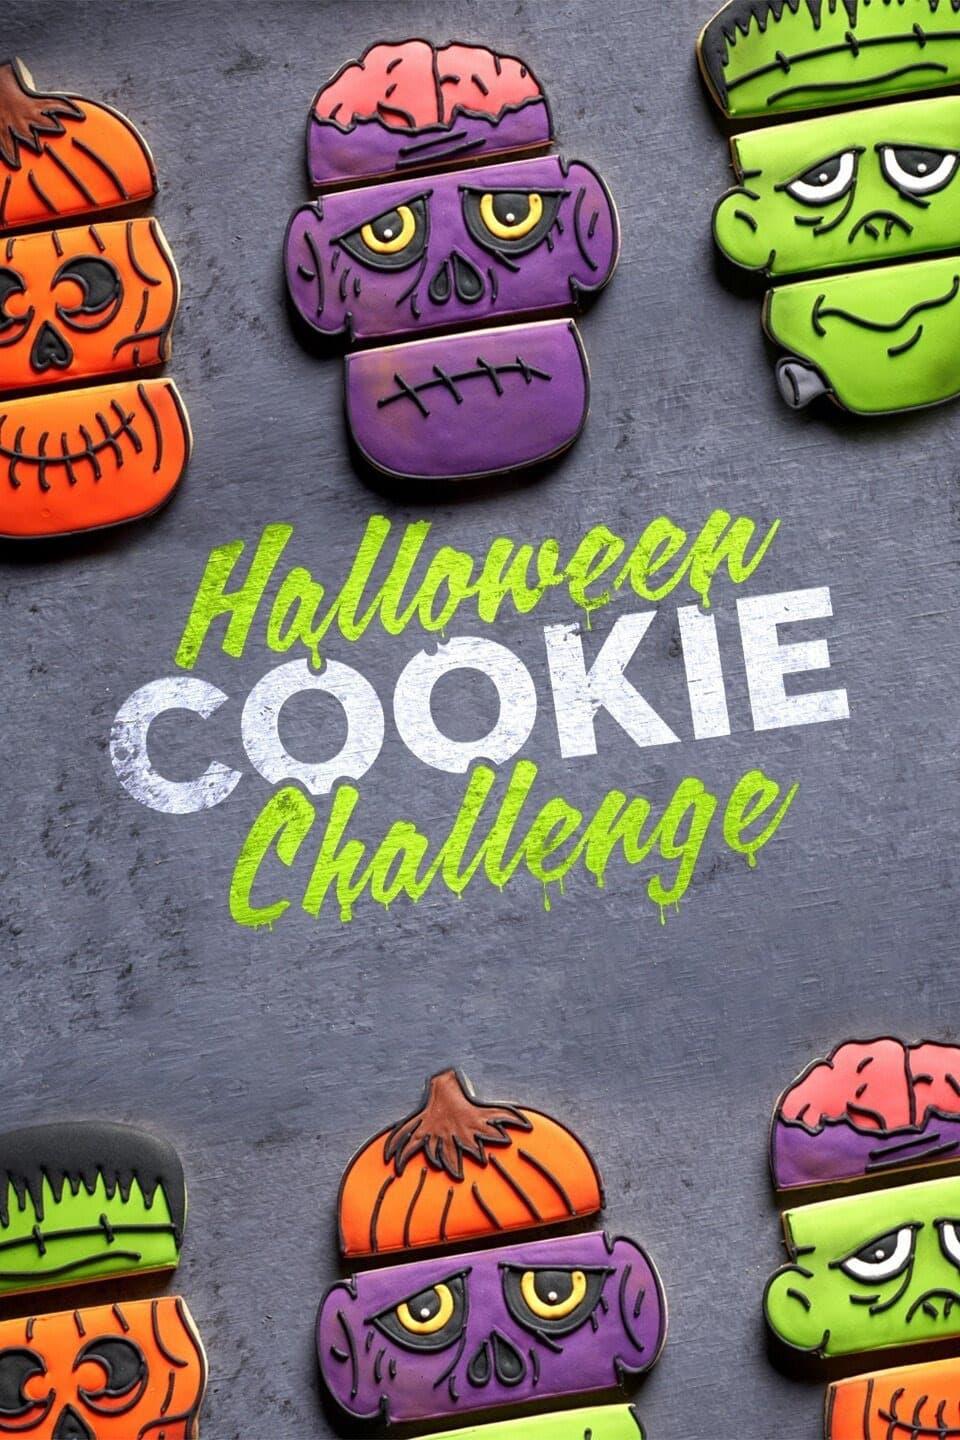 TV ratings for Halloween Cookie Challenge in France. Food Network TV series